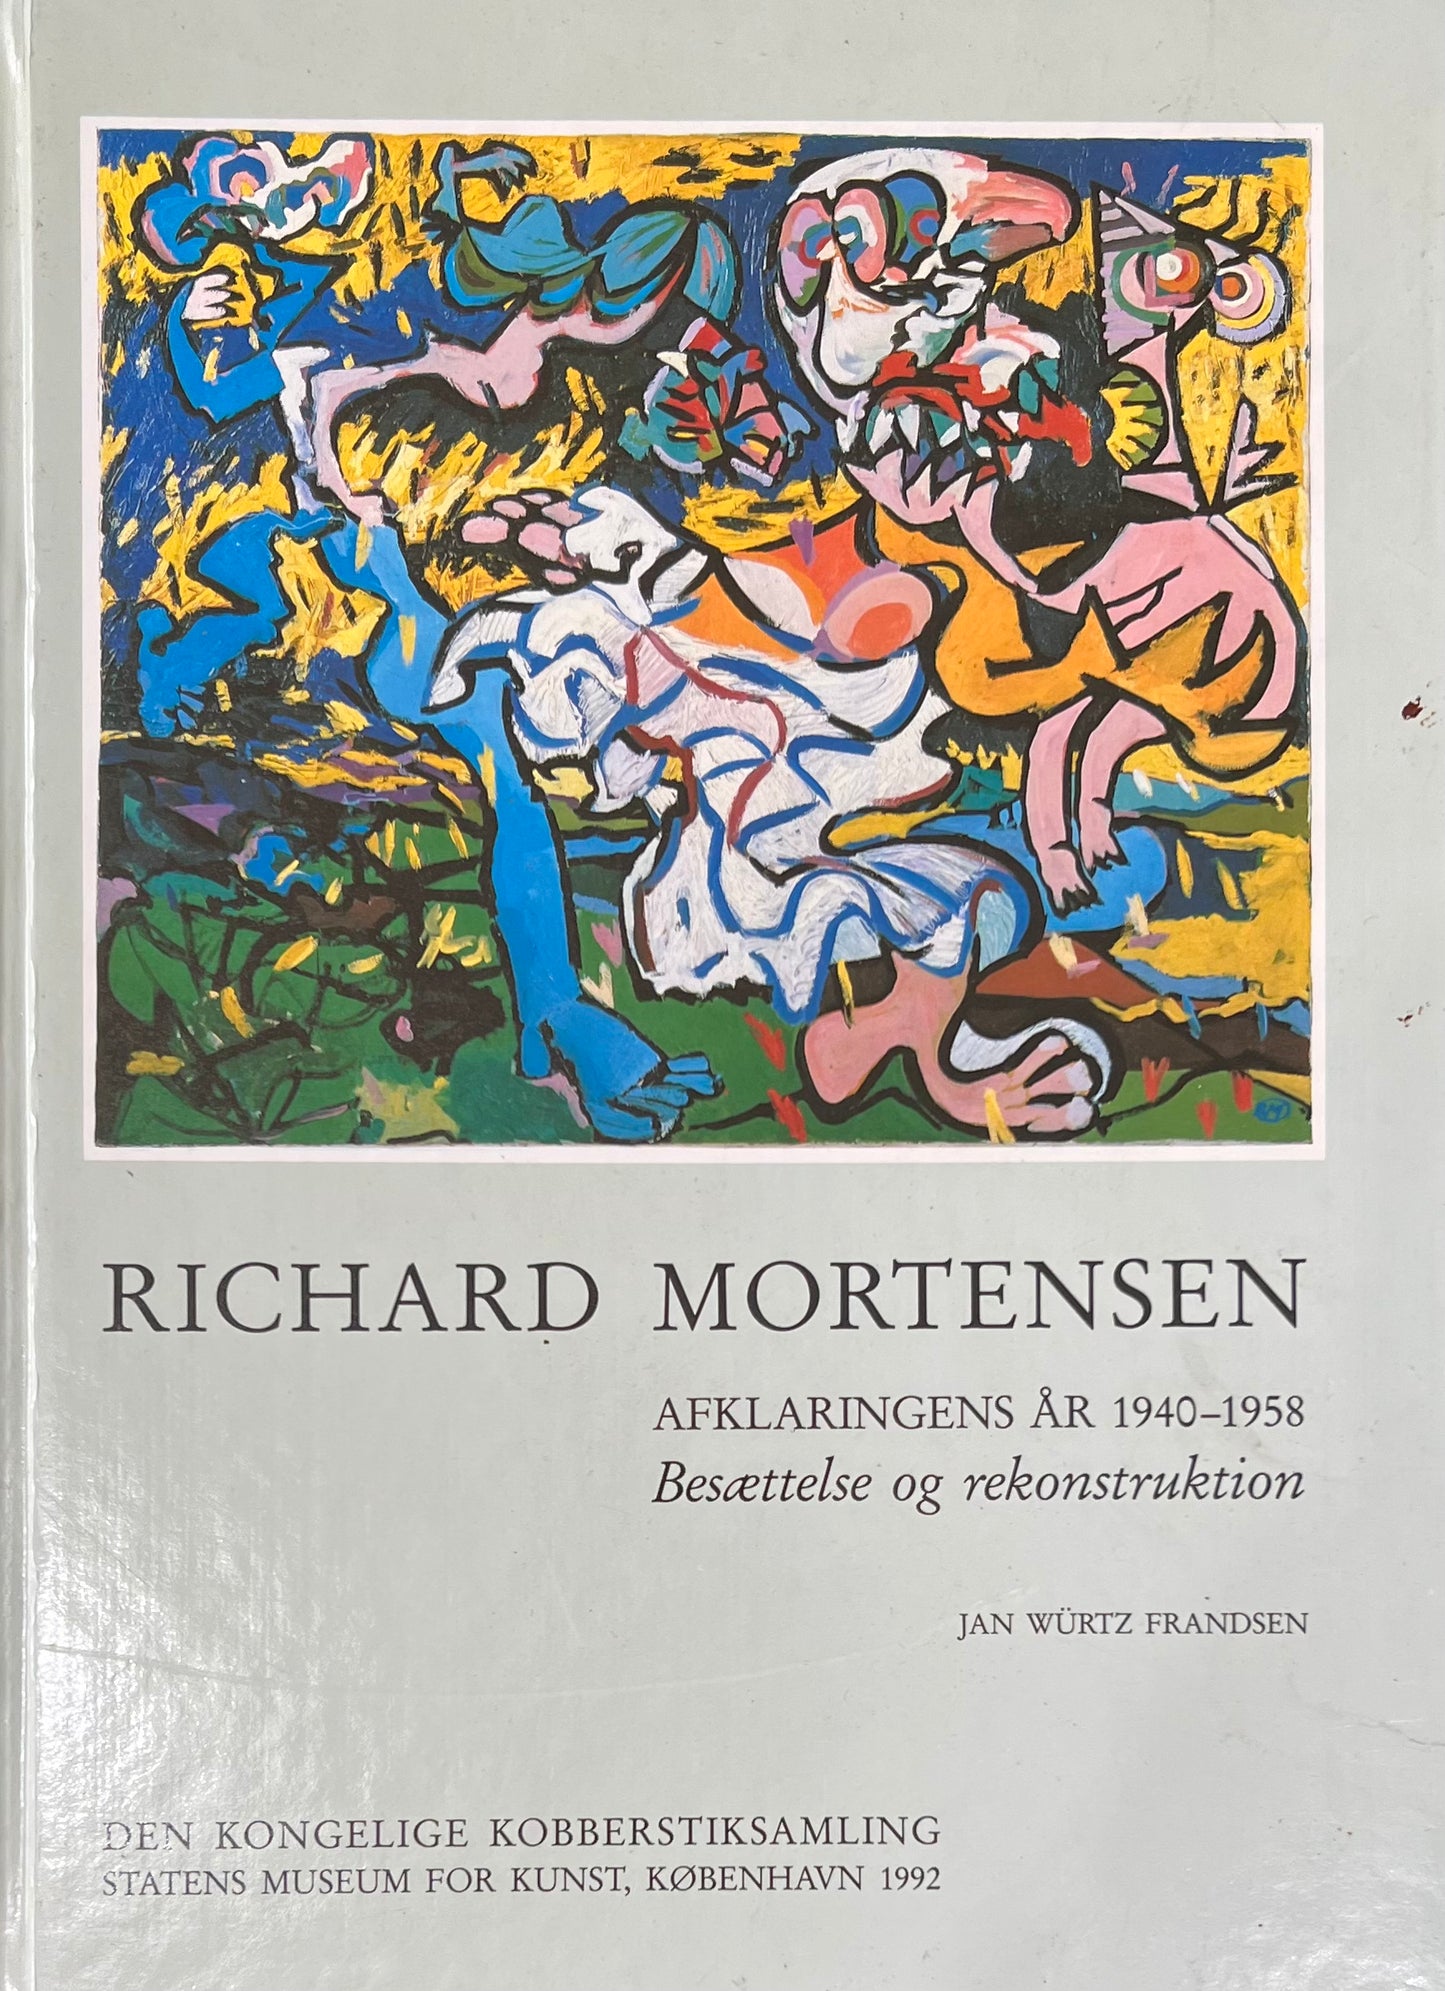 Jan Würtz Frandsen. “Richard Mortensen, afklaringens år, 1940-1958”, 1992